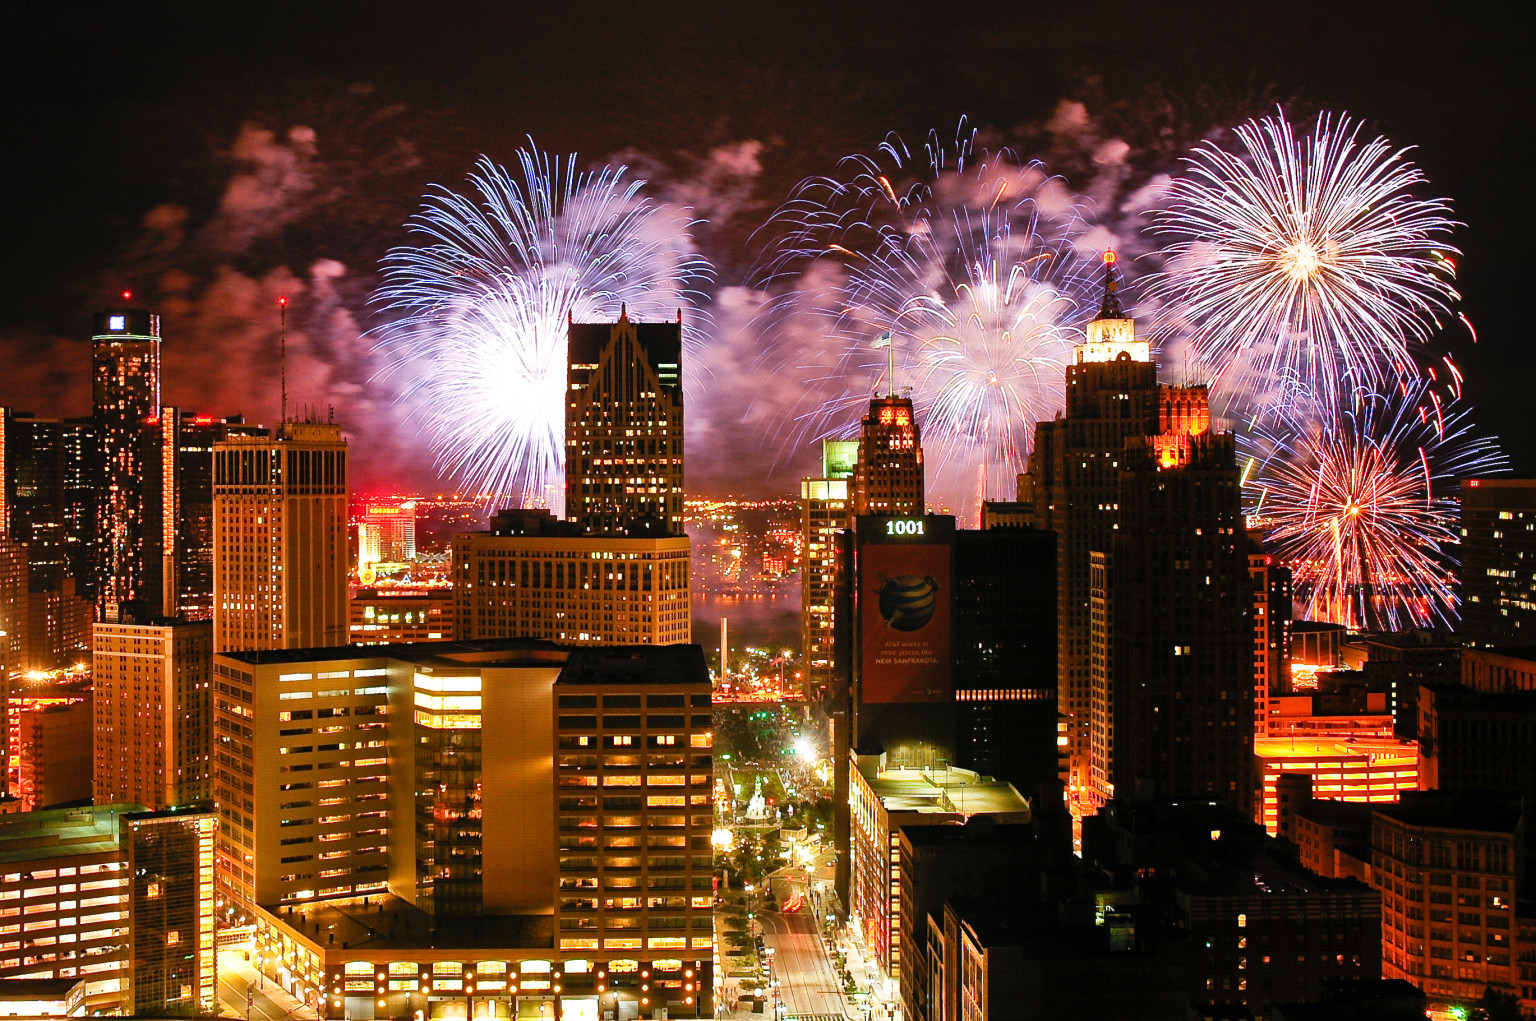 Detroit Fireworks 2013 Celebration Weeks Before 4th Of July Shows